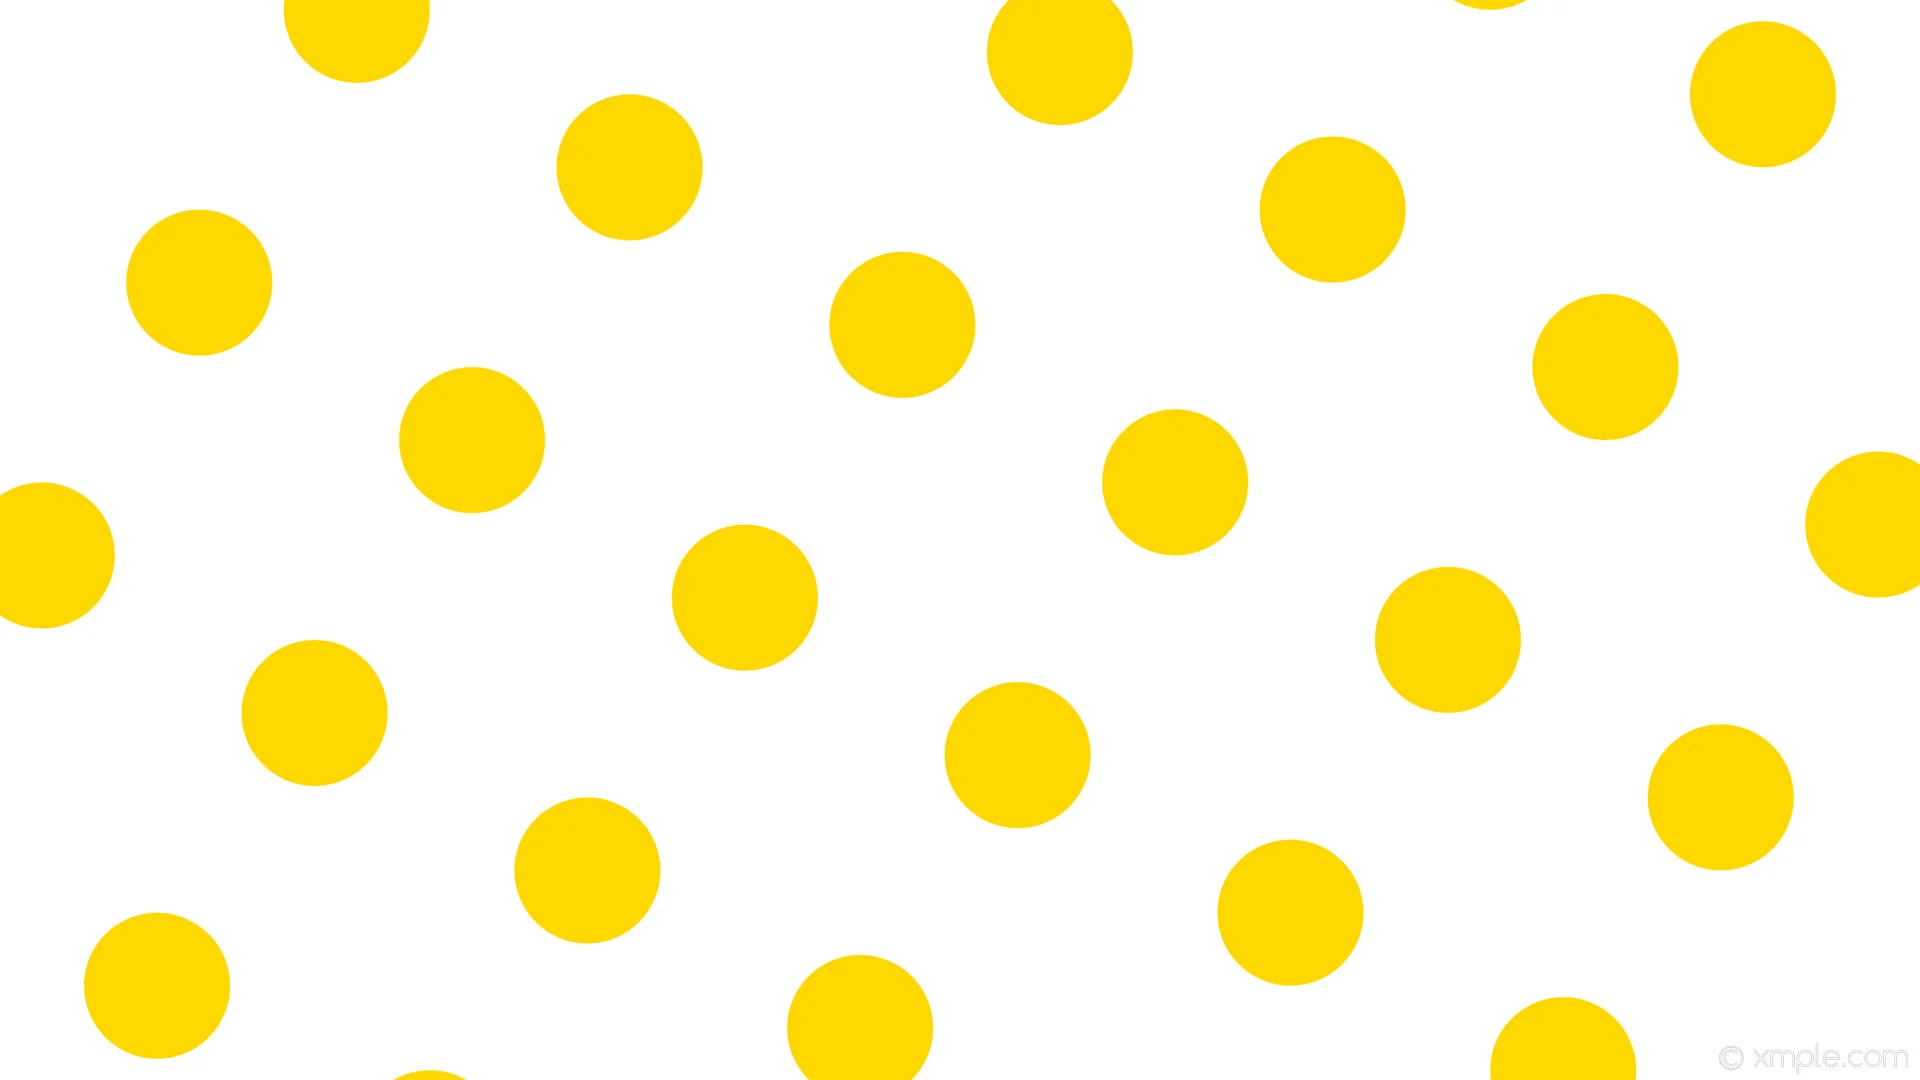 Wallpaper white polka dots spots yellow gold #ffffff #ffd700 240 146px 315px